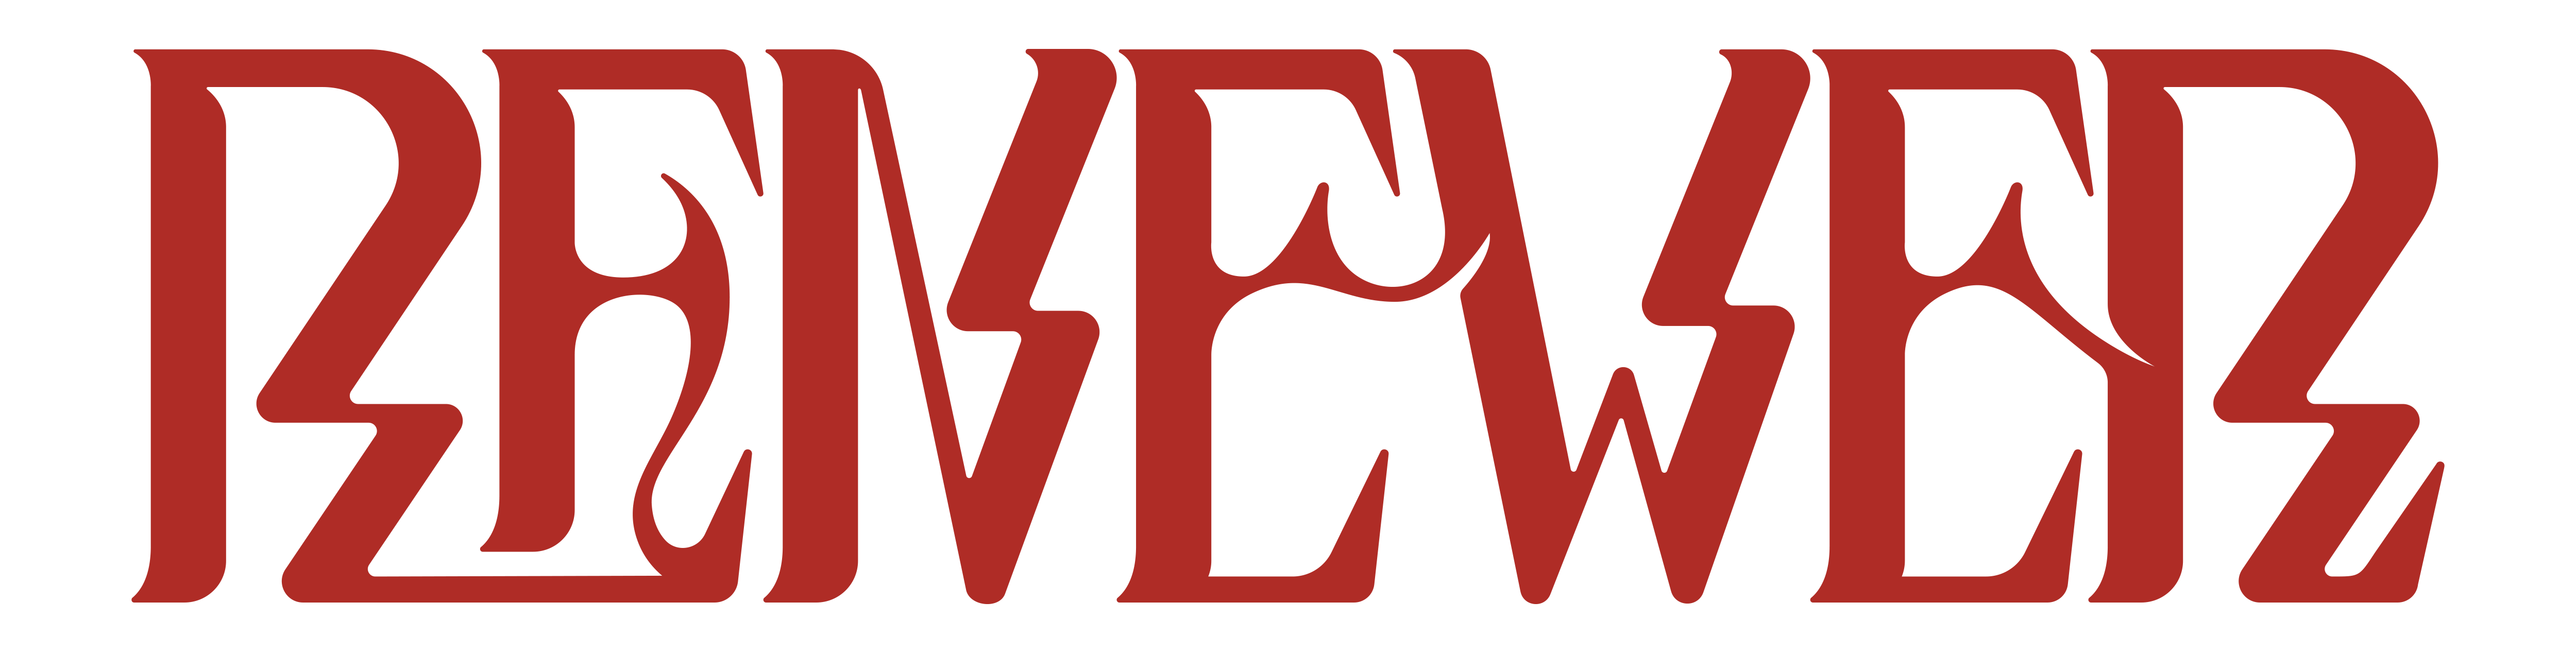 Renewer logo